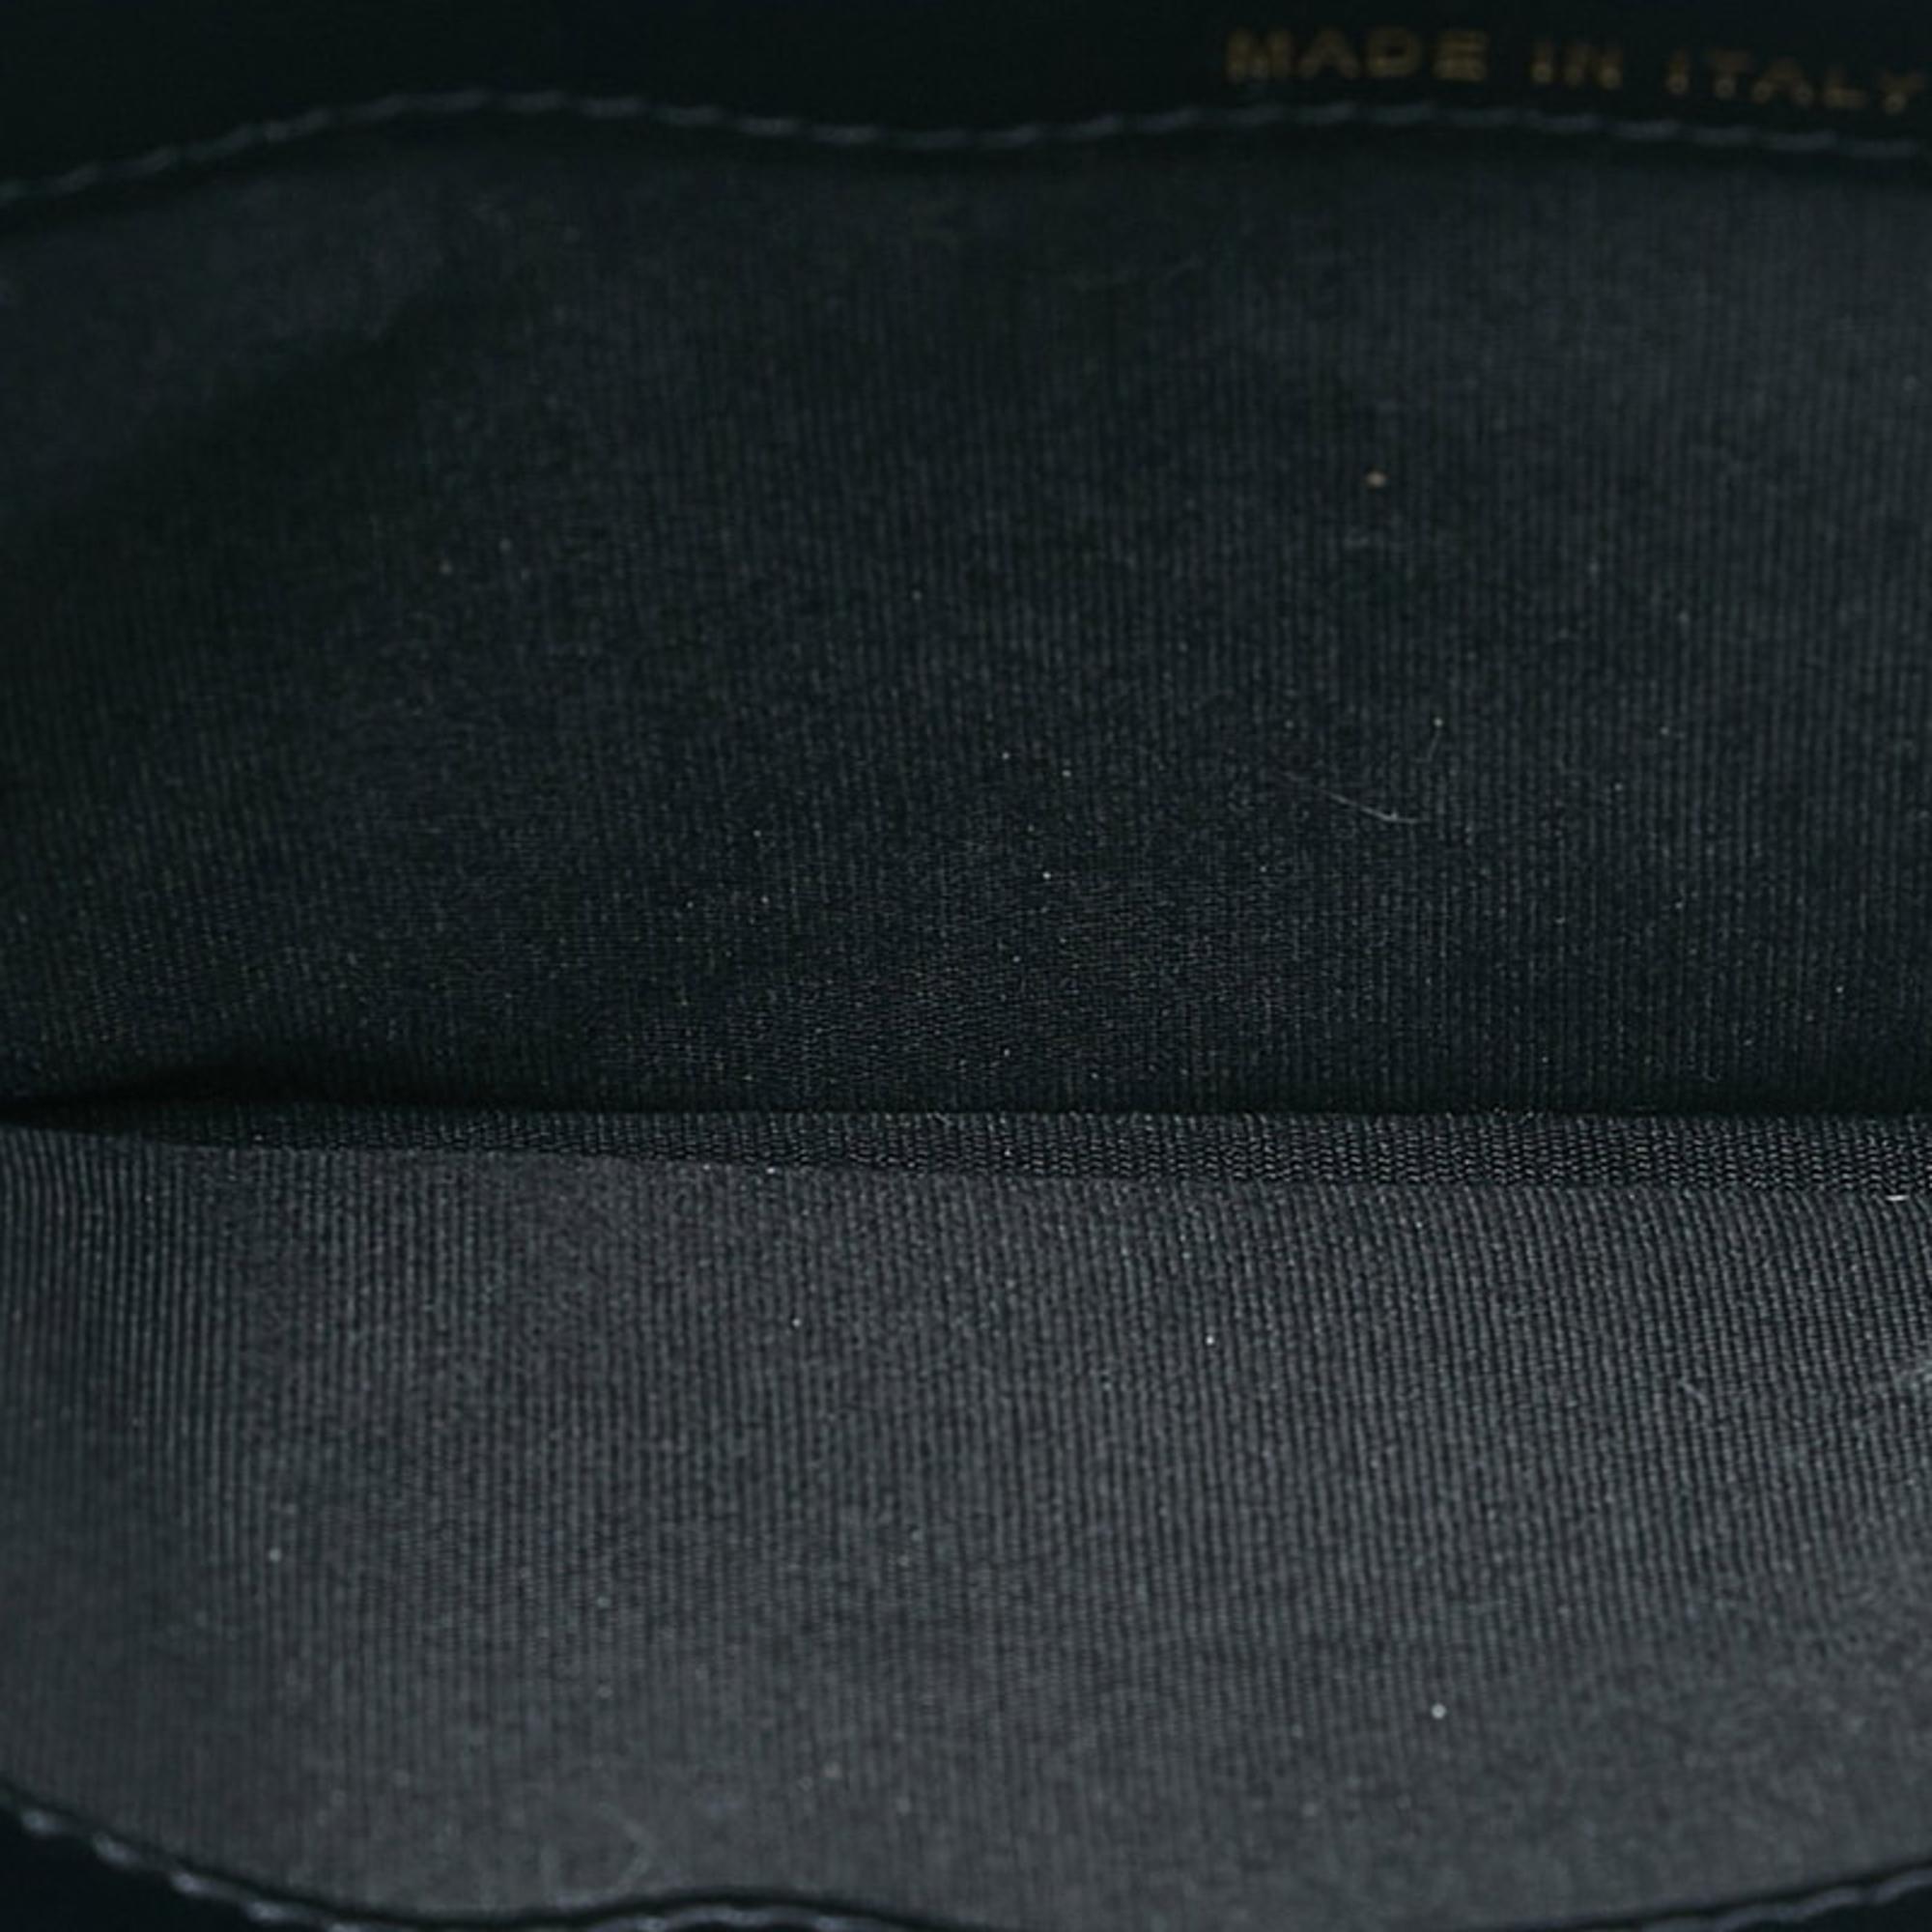 Chanel Black Leather CC Filigree Caviar Chain Wallet Bag Crossbody Bag